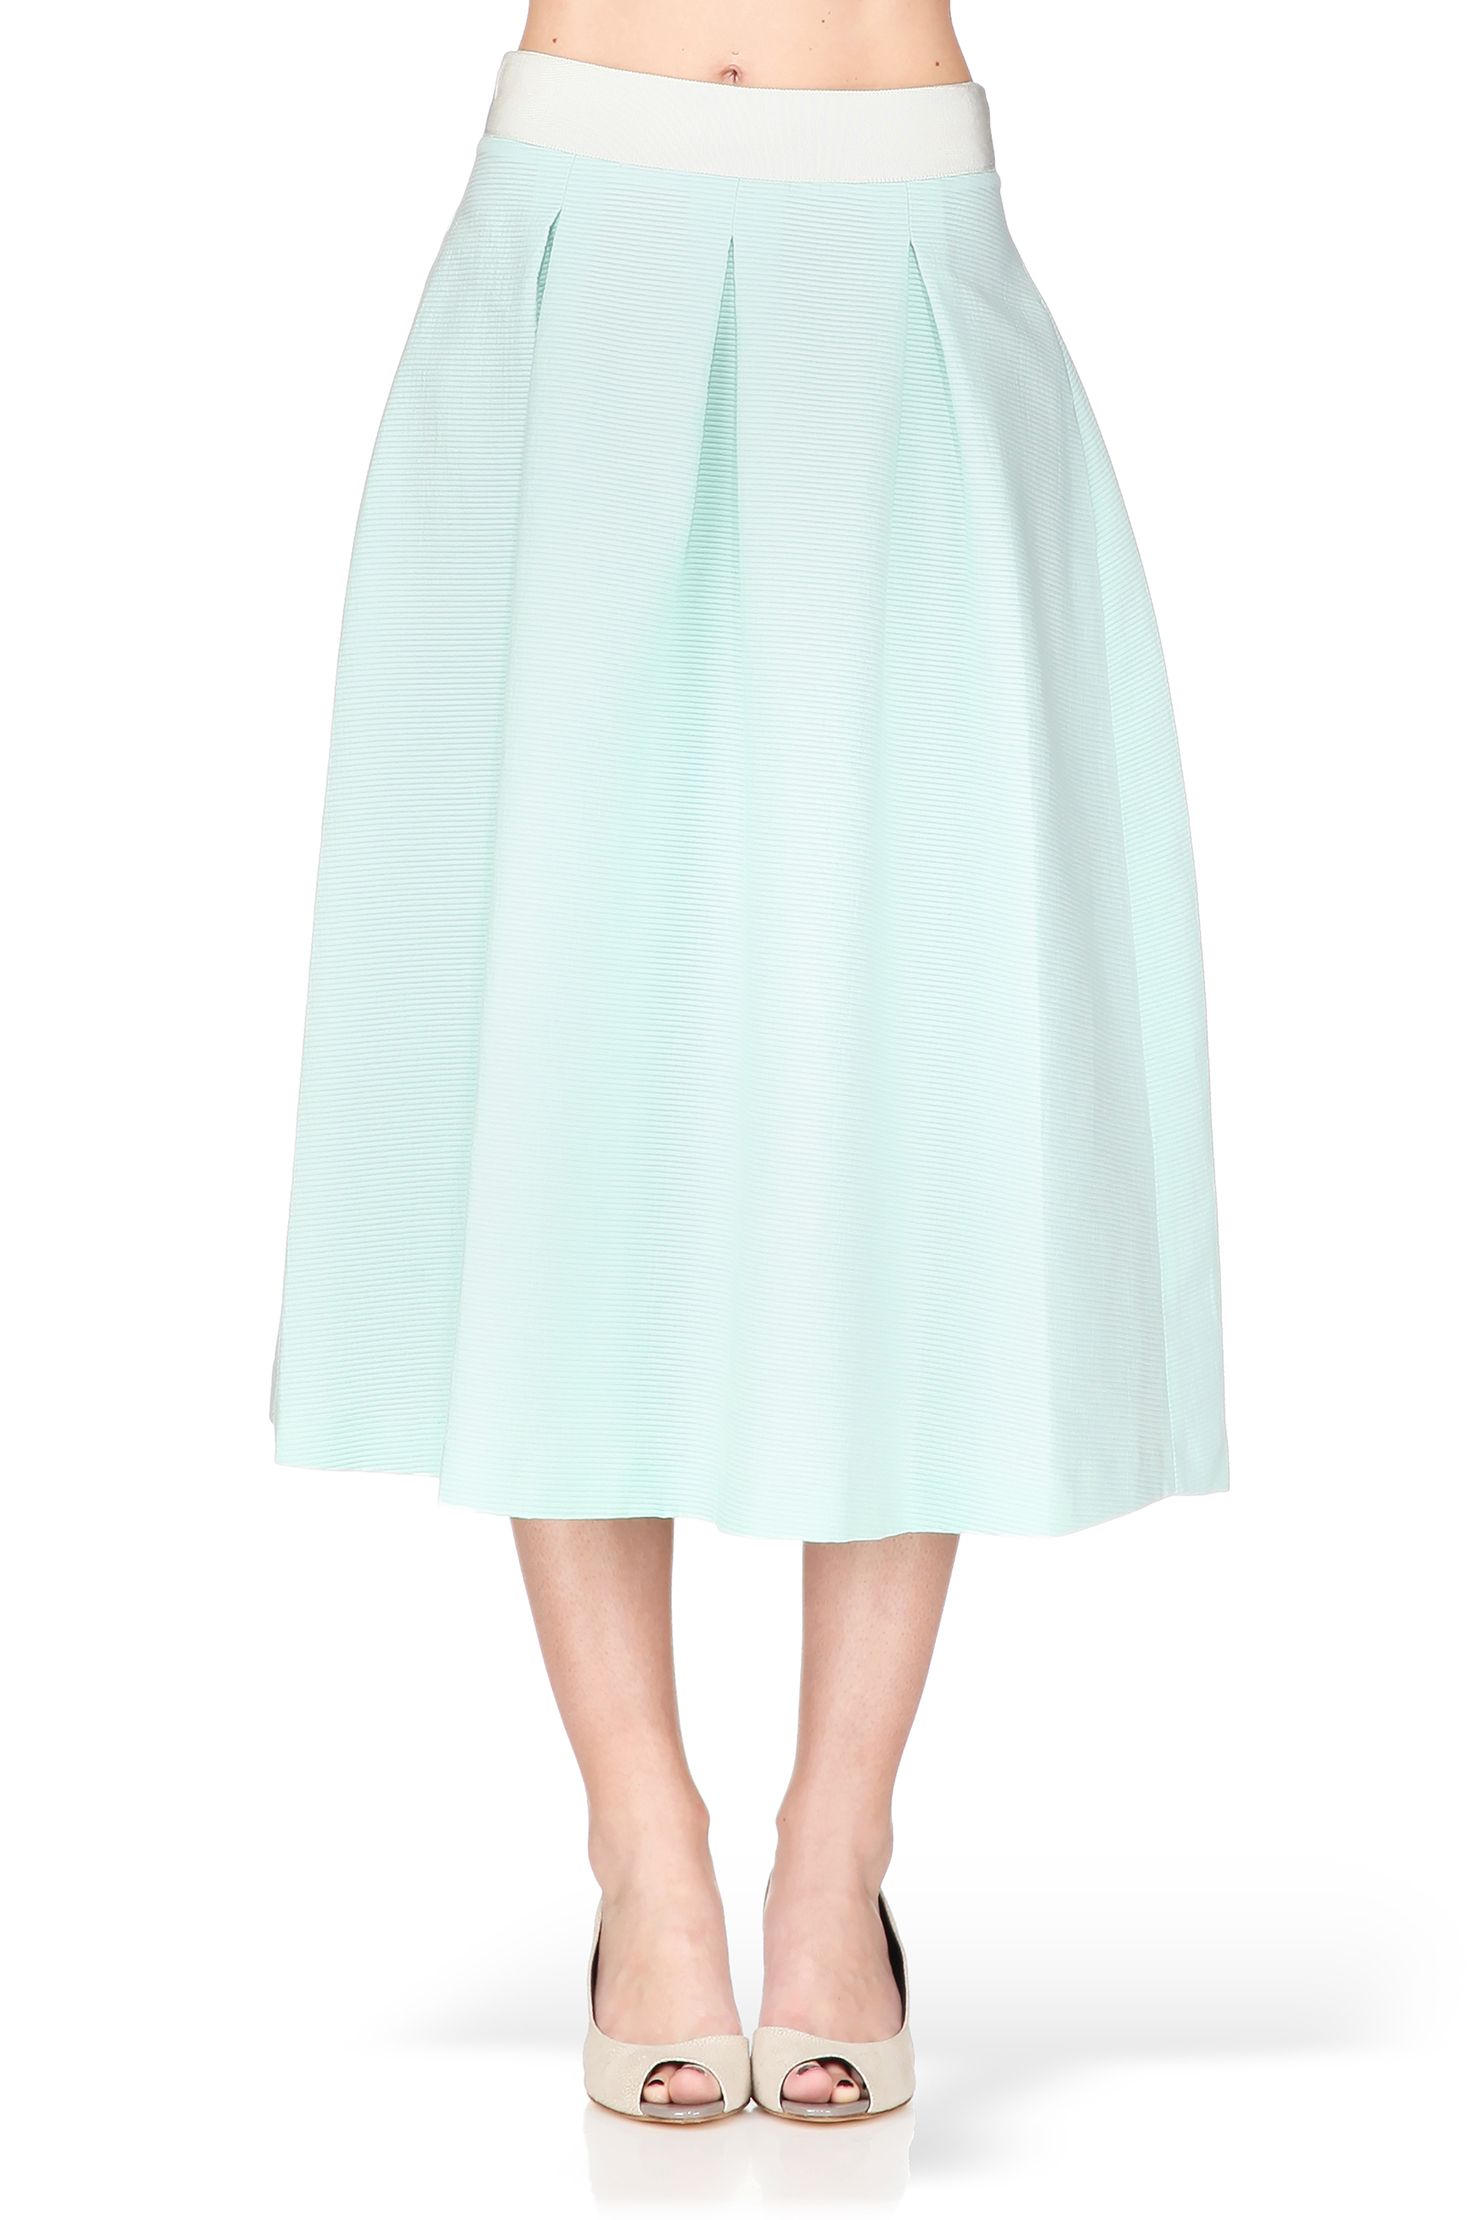 Tara Jarmon Midi Skirt / Maxi Skirt in Green | Lyst